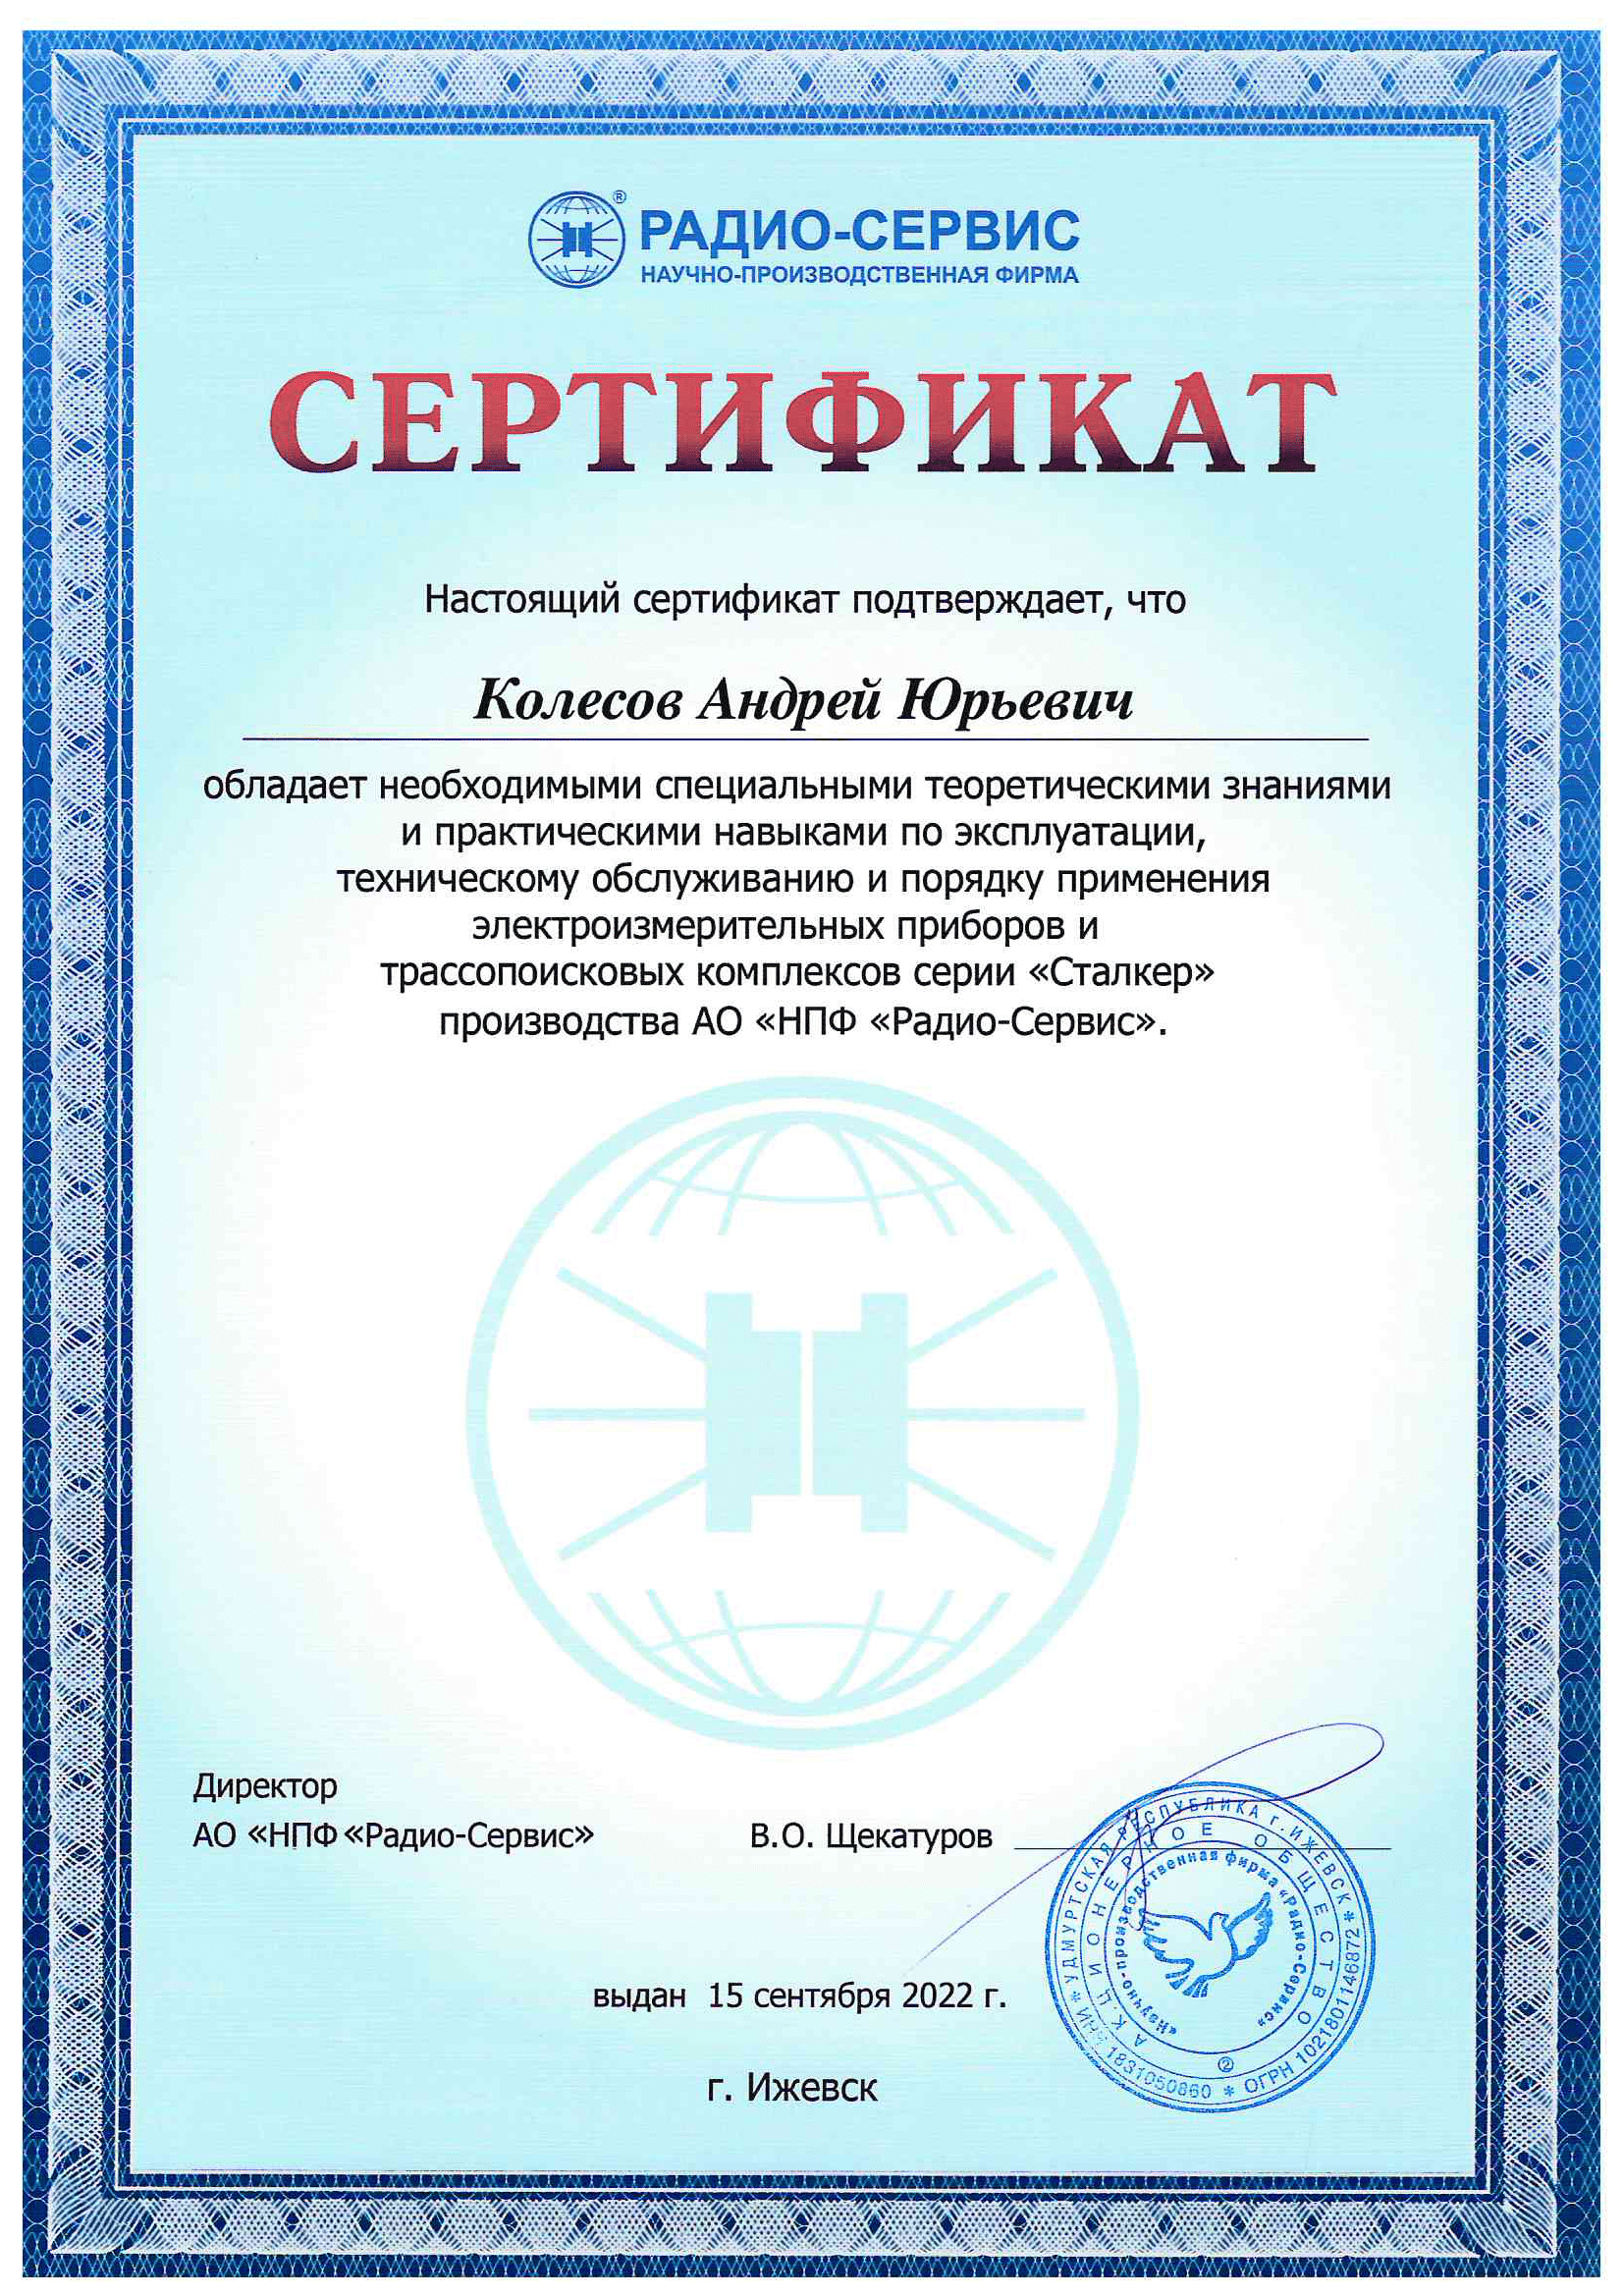 Наш сотрудник получил сертификат АО "НПФ "Радио-Сервис"  